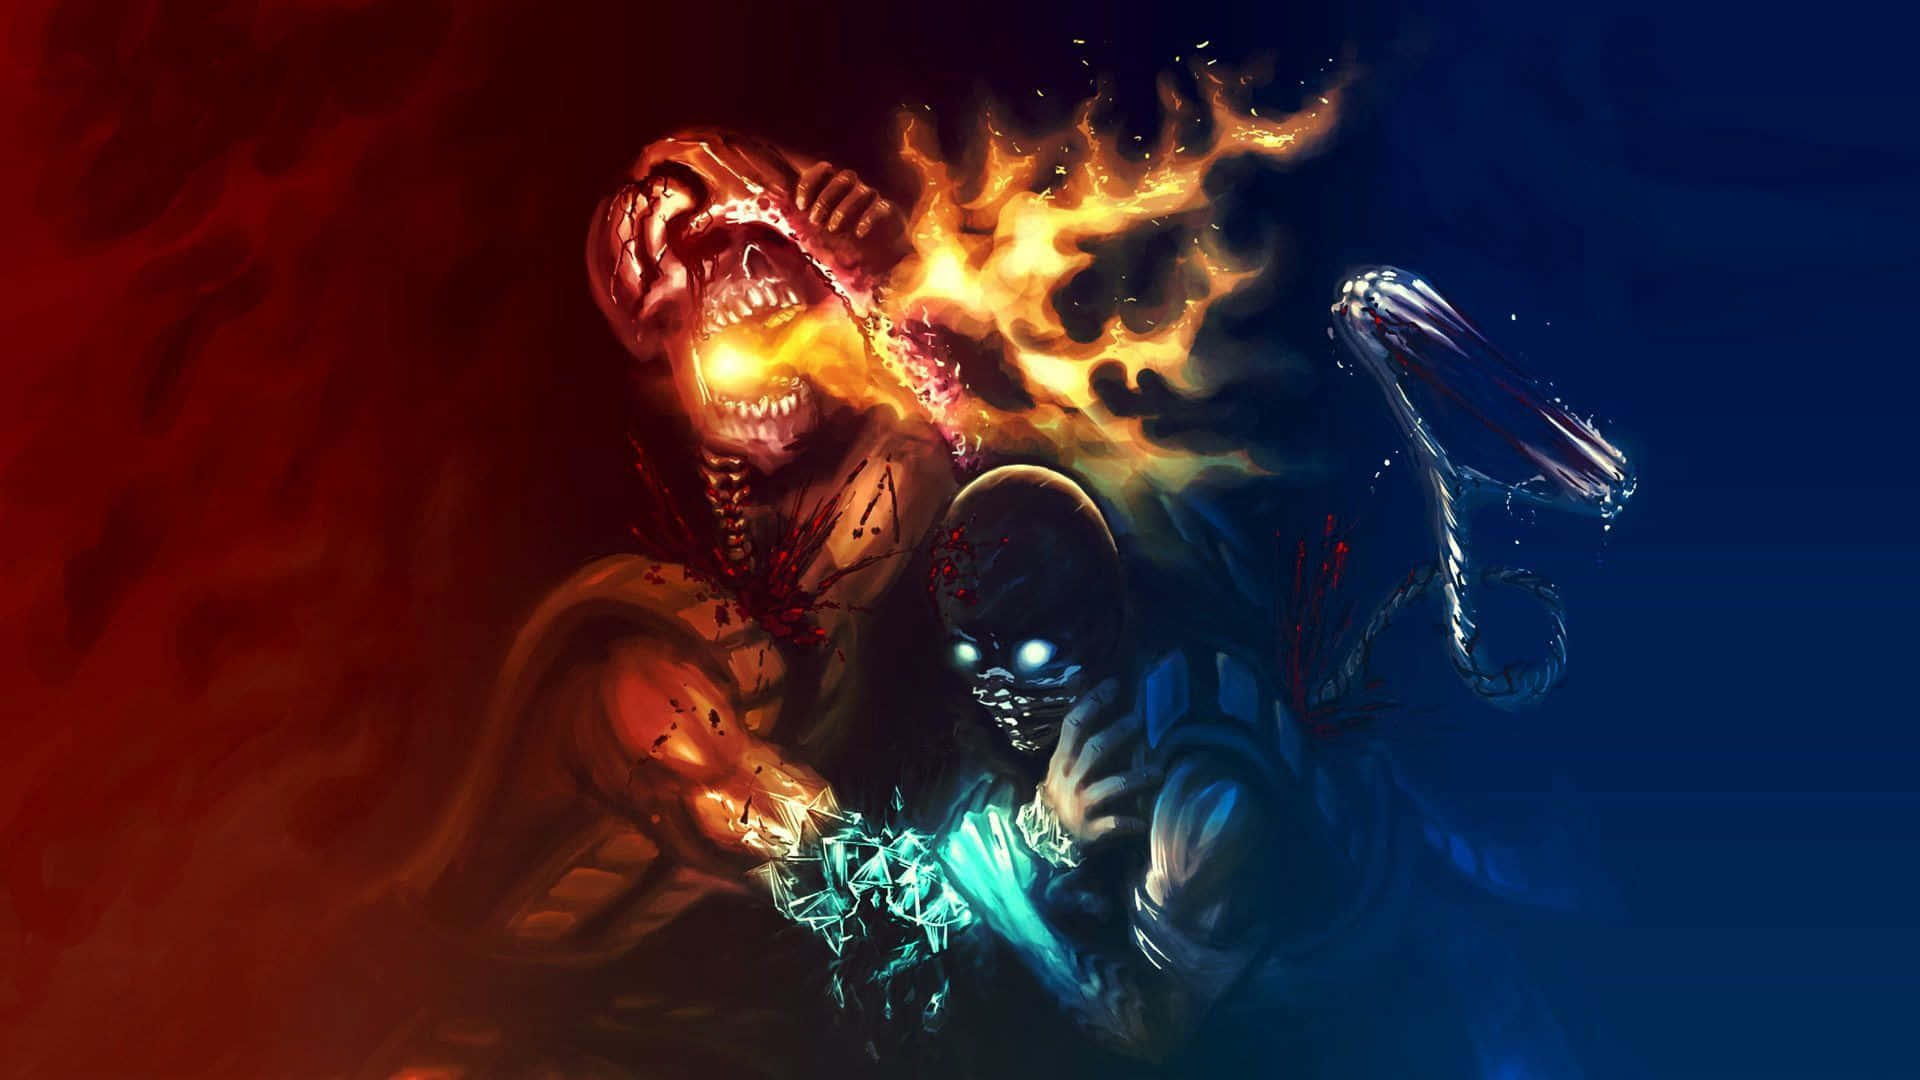 Fierce Sub-zero Unleashes His Power in Mortal Kombat Wallpaper